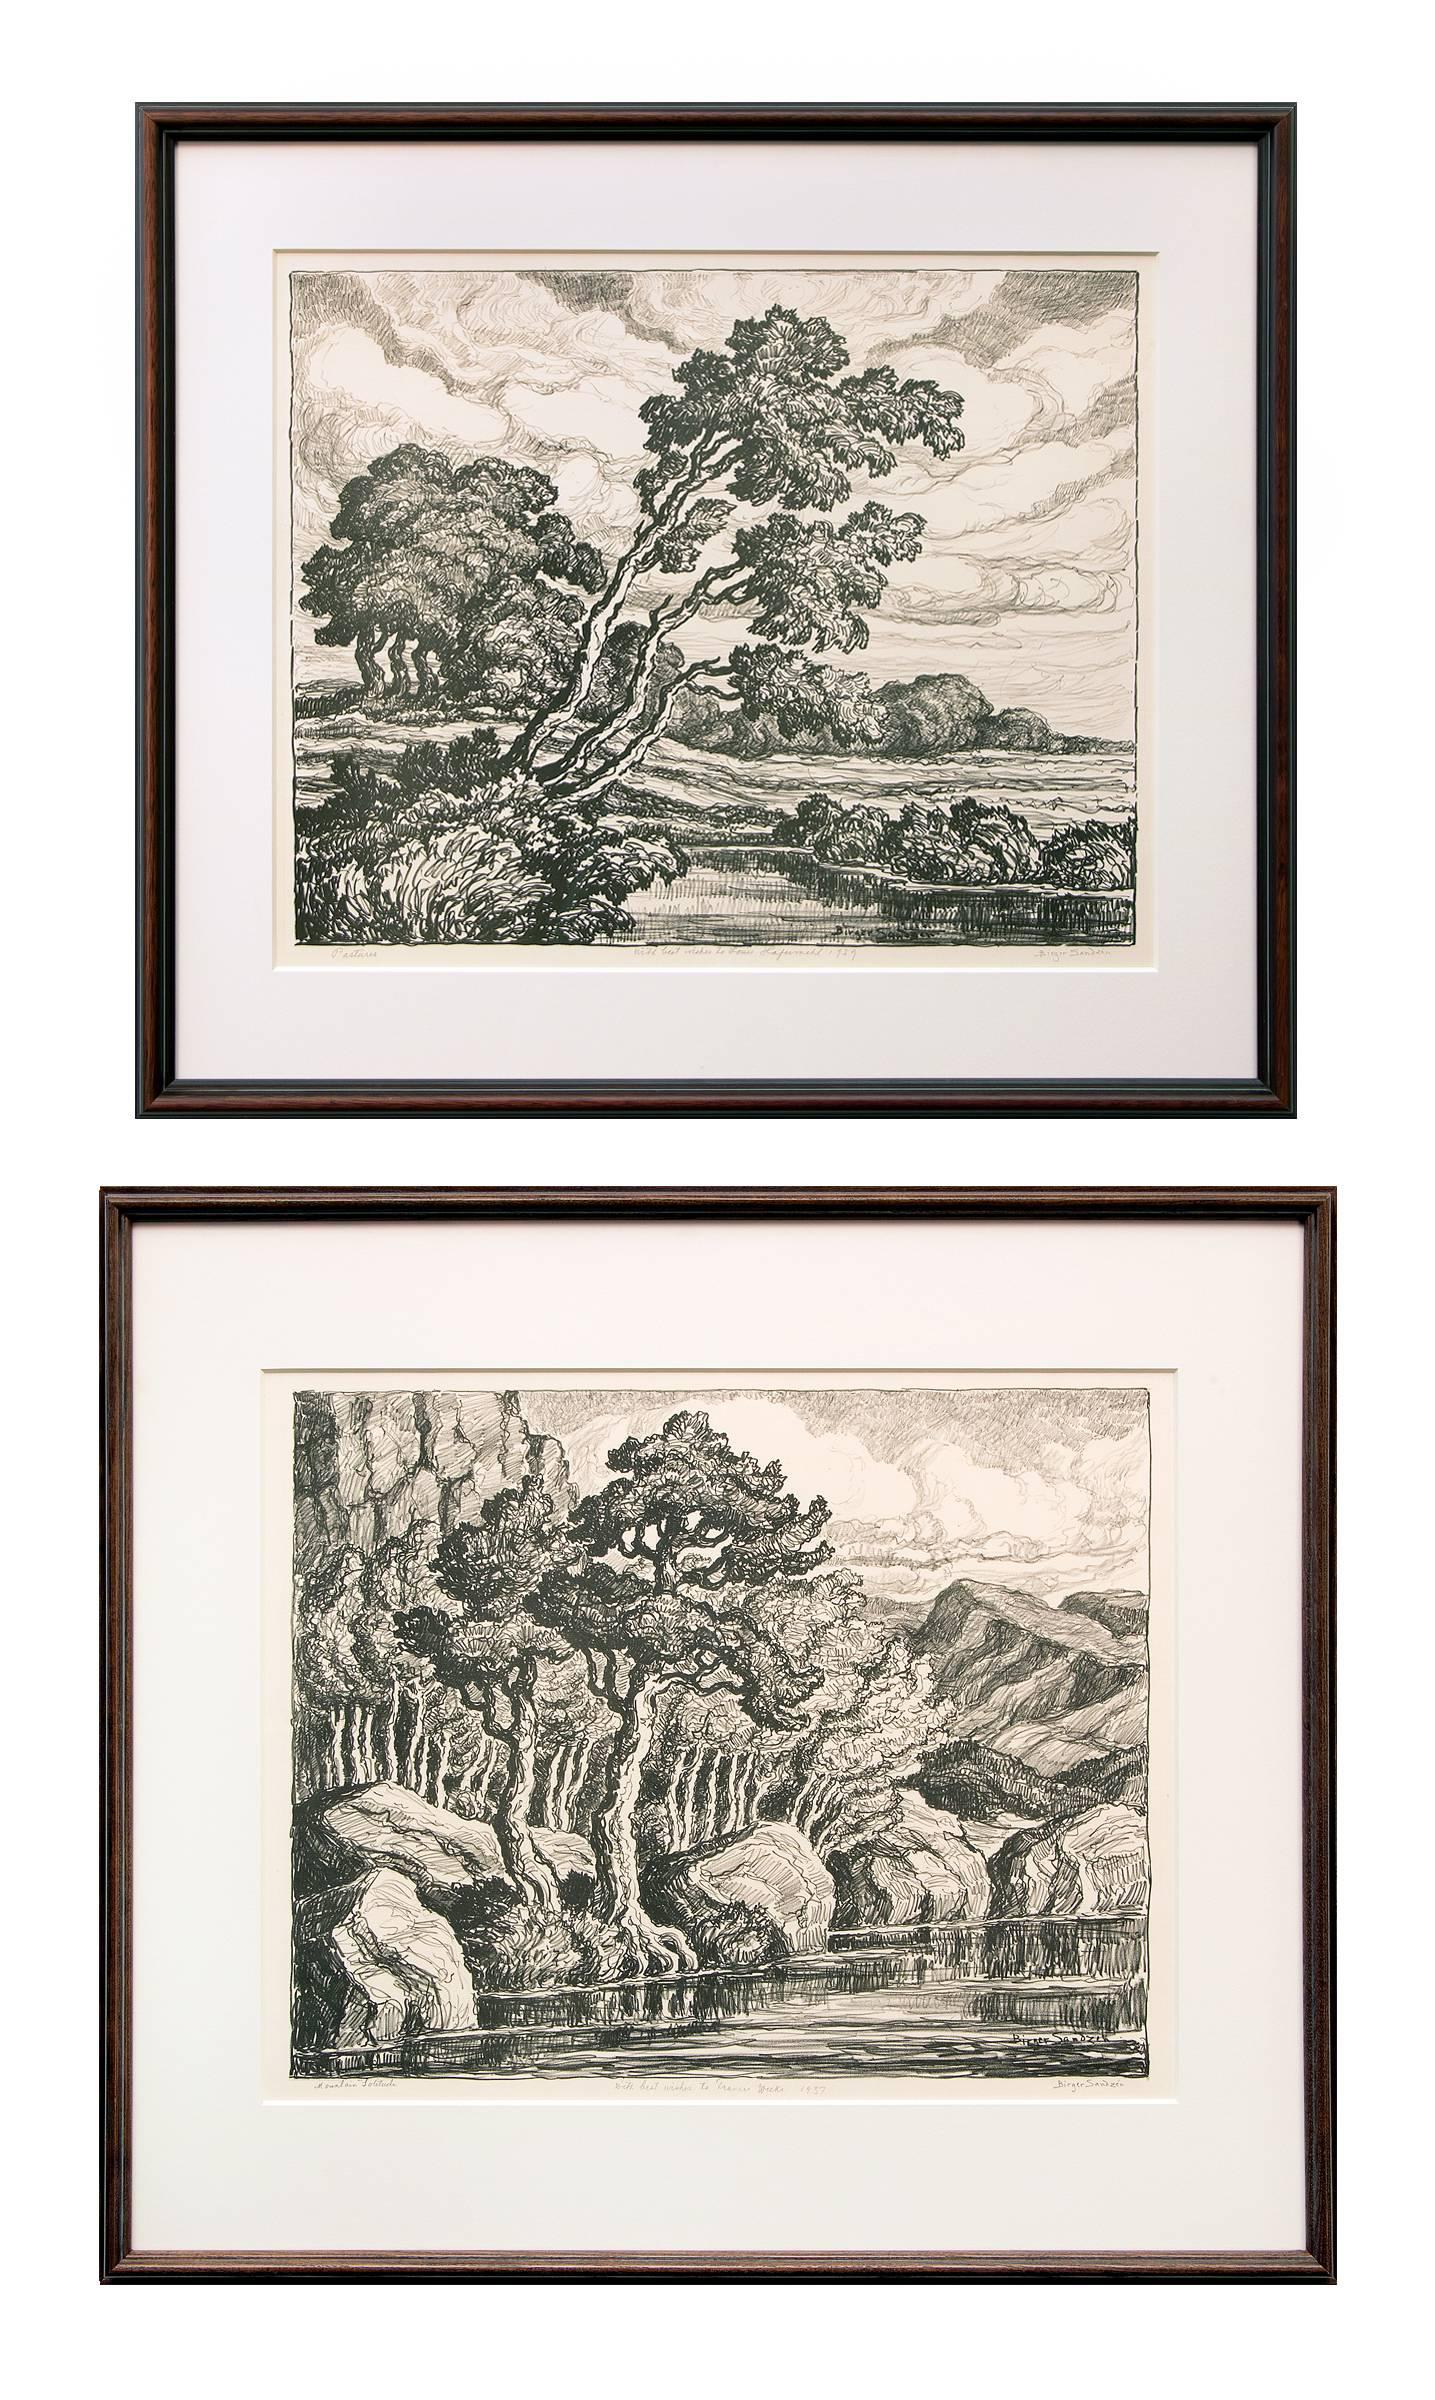 Birger Sandzen Figurative Print - Pastures & Mountain Solitude (Two Original Lithographs signed by Birger Sandzén)